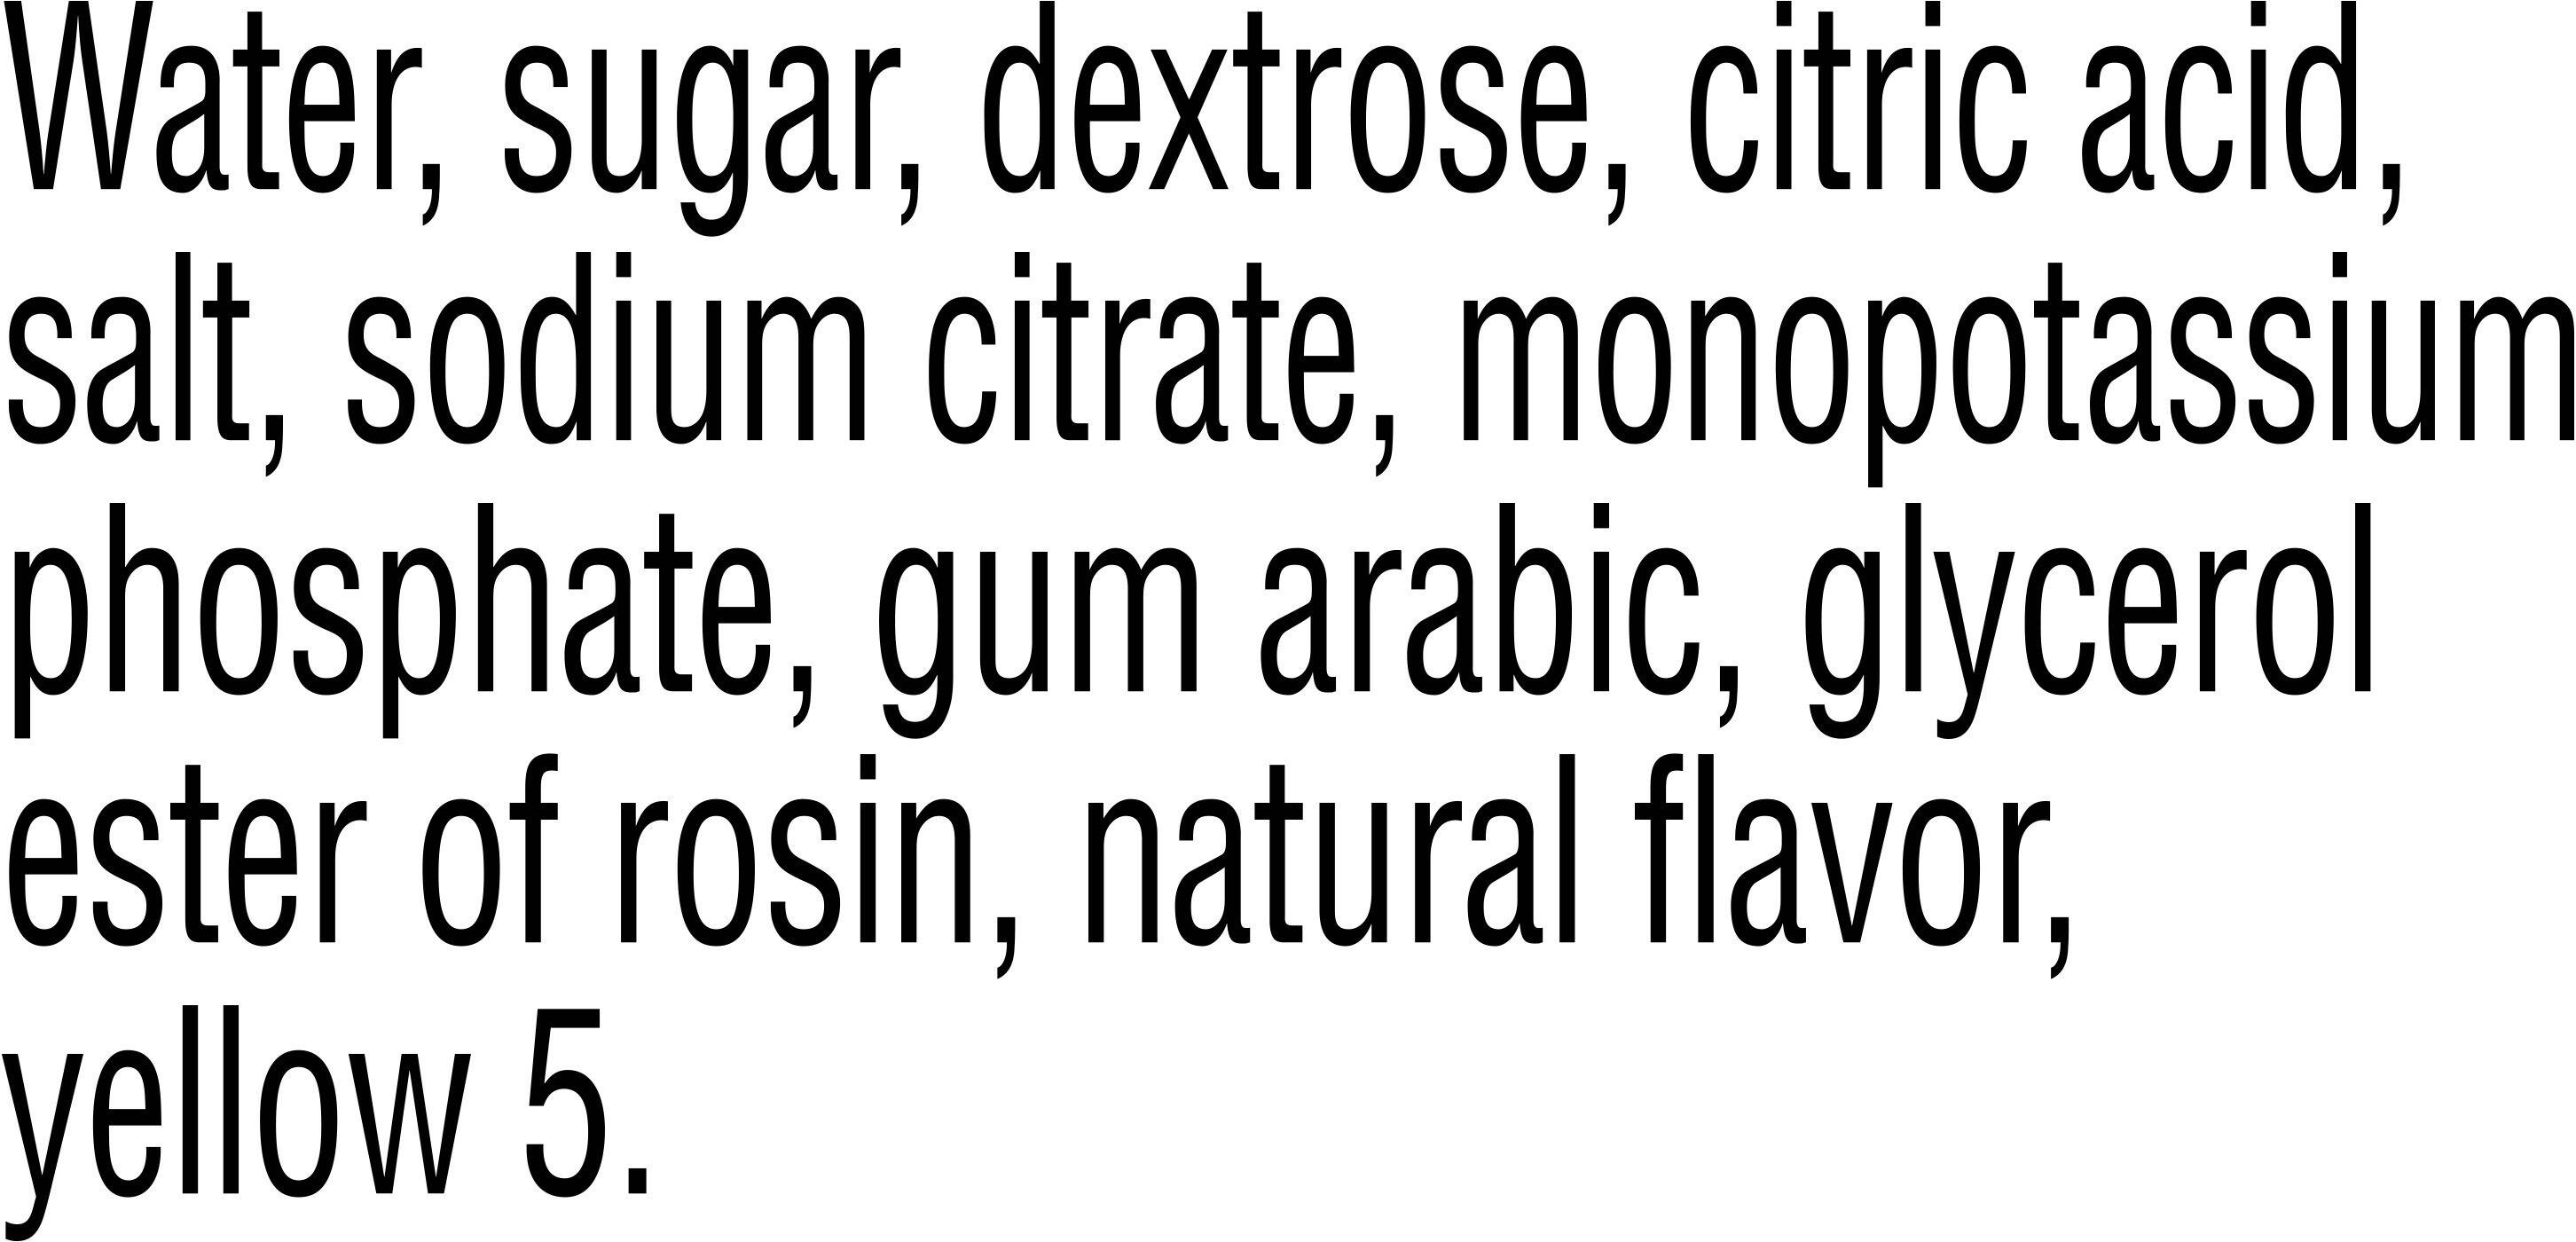 Image describing nutrition information for product Gatorade Lemon Lime